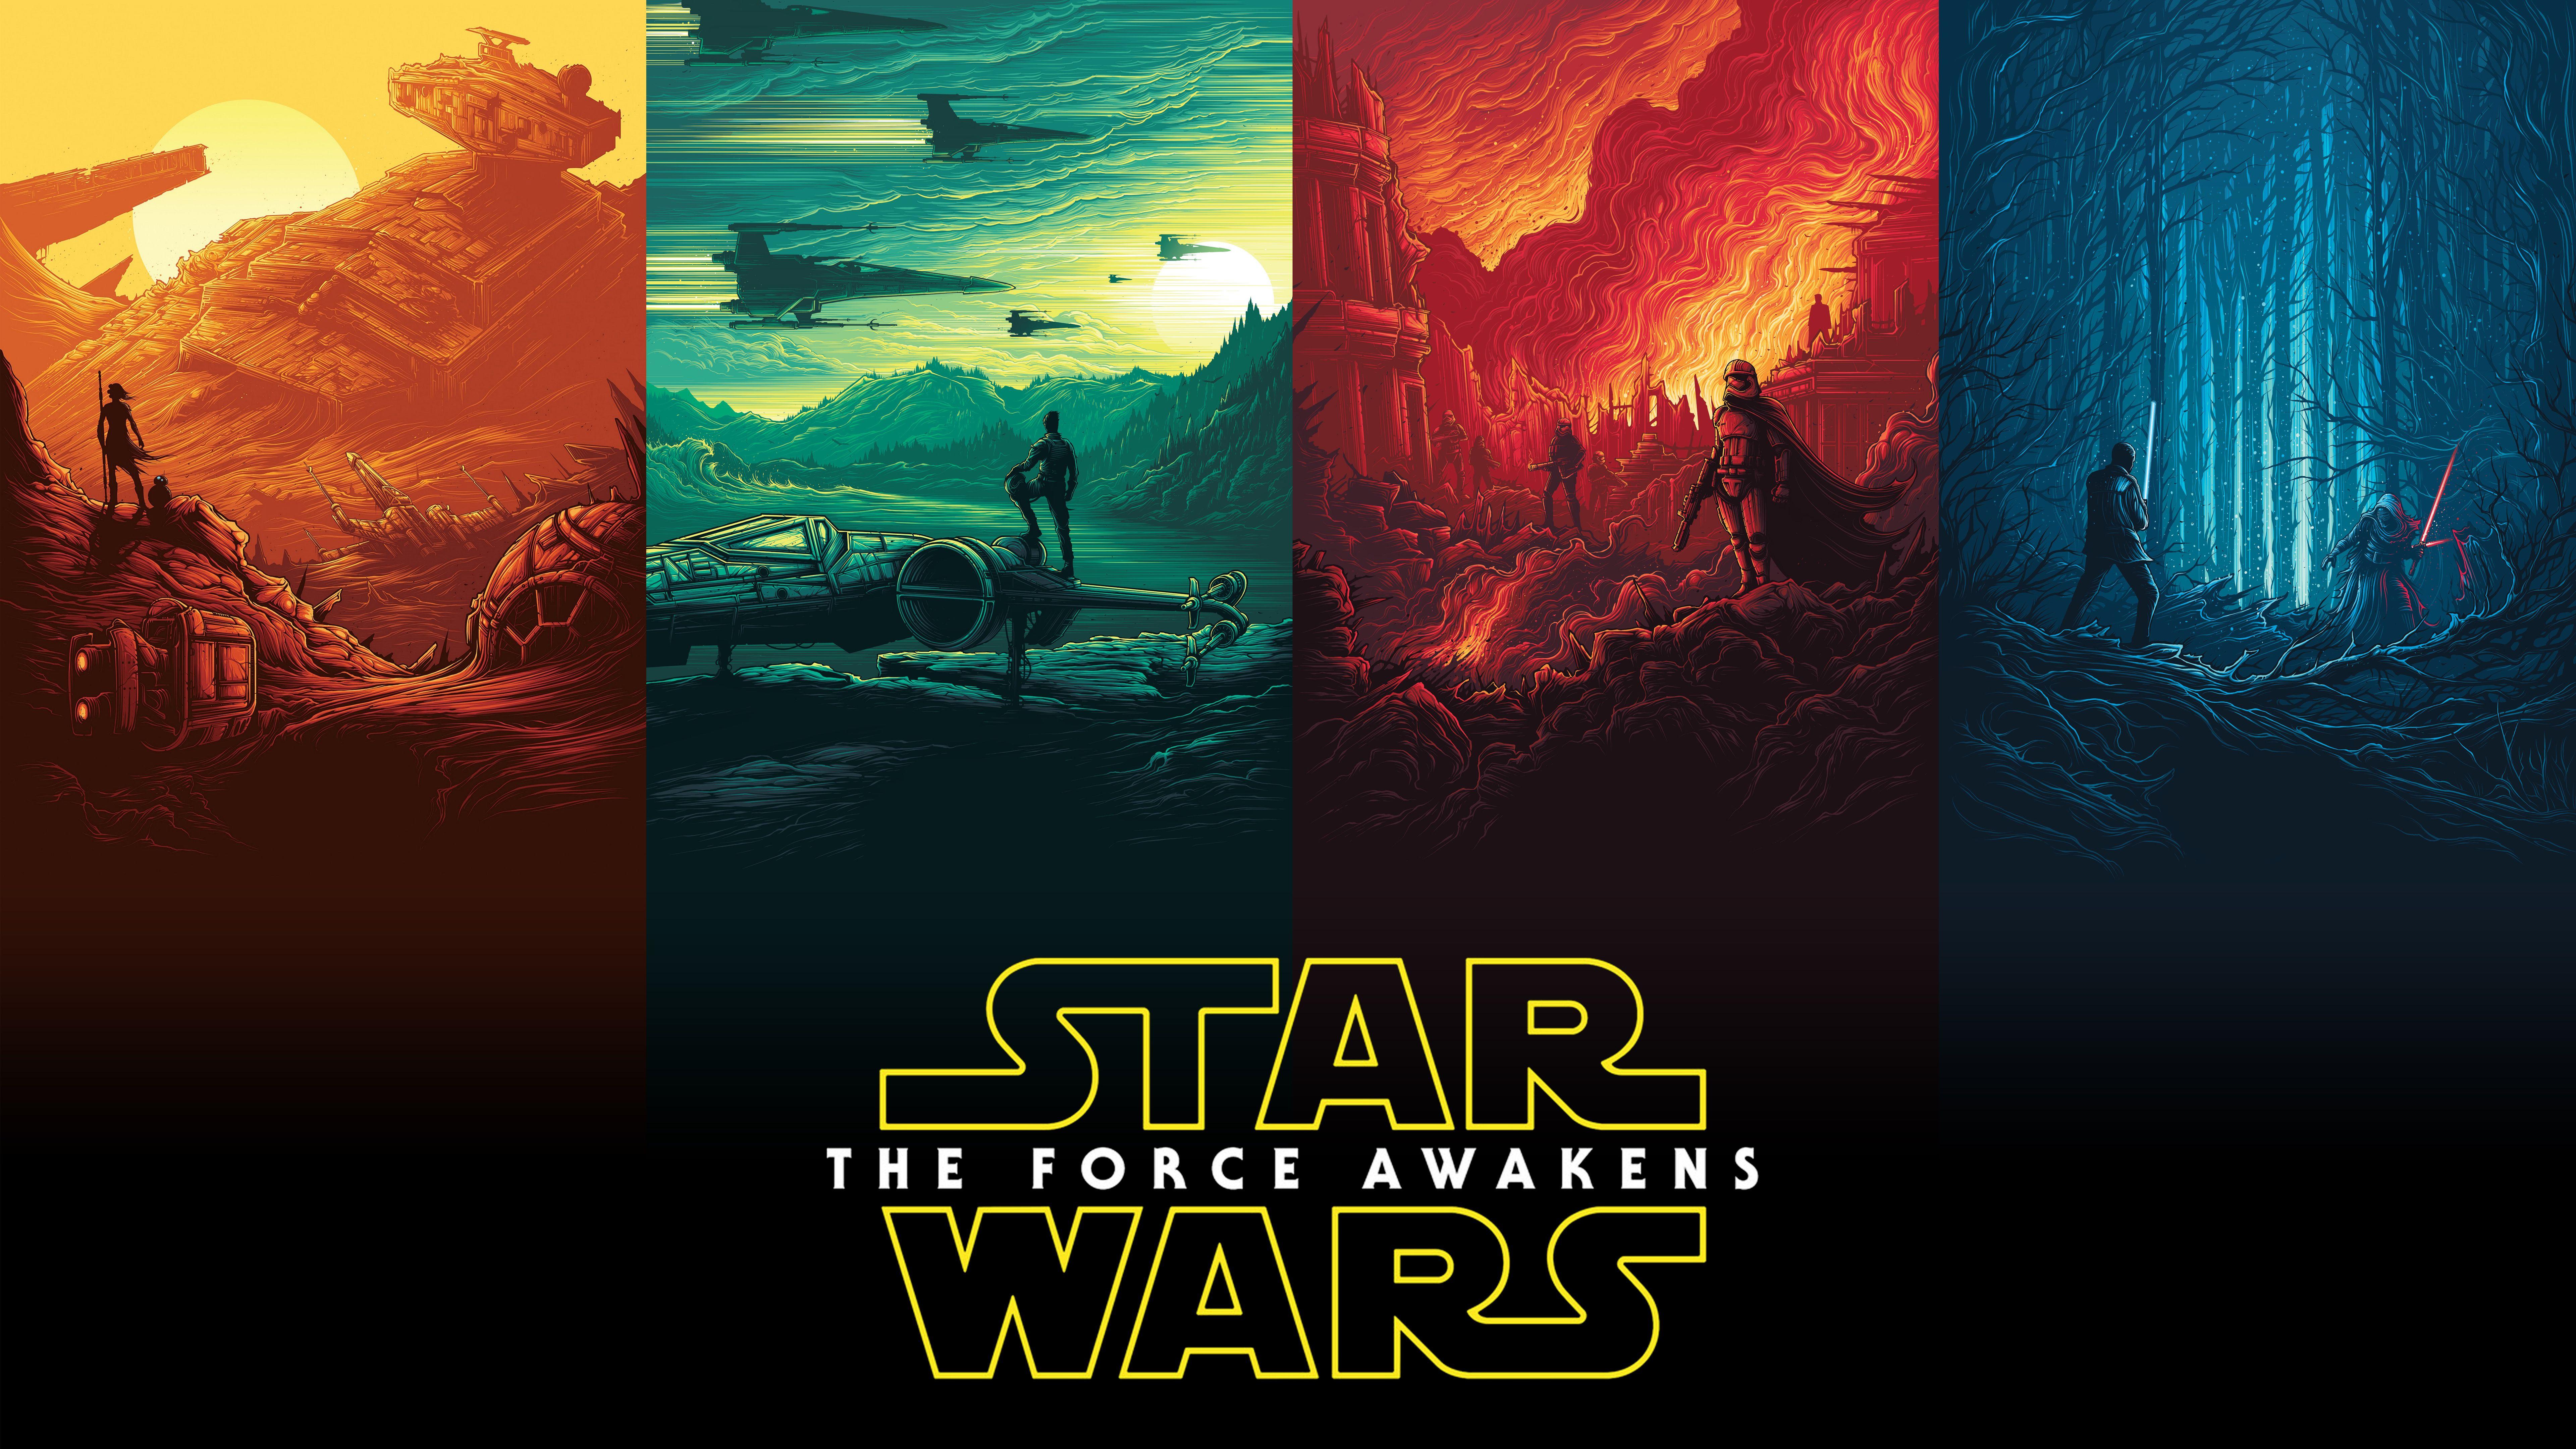 Star Wars Poster Logo 8k HD 4k Wallpaper, Image